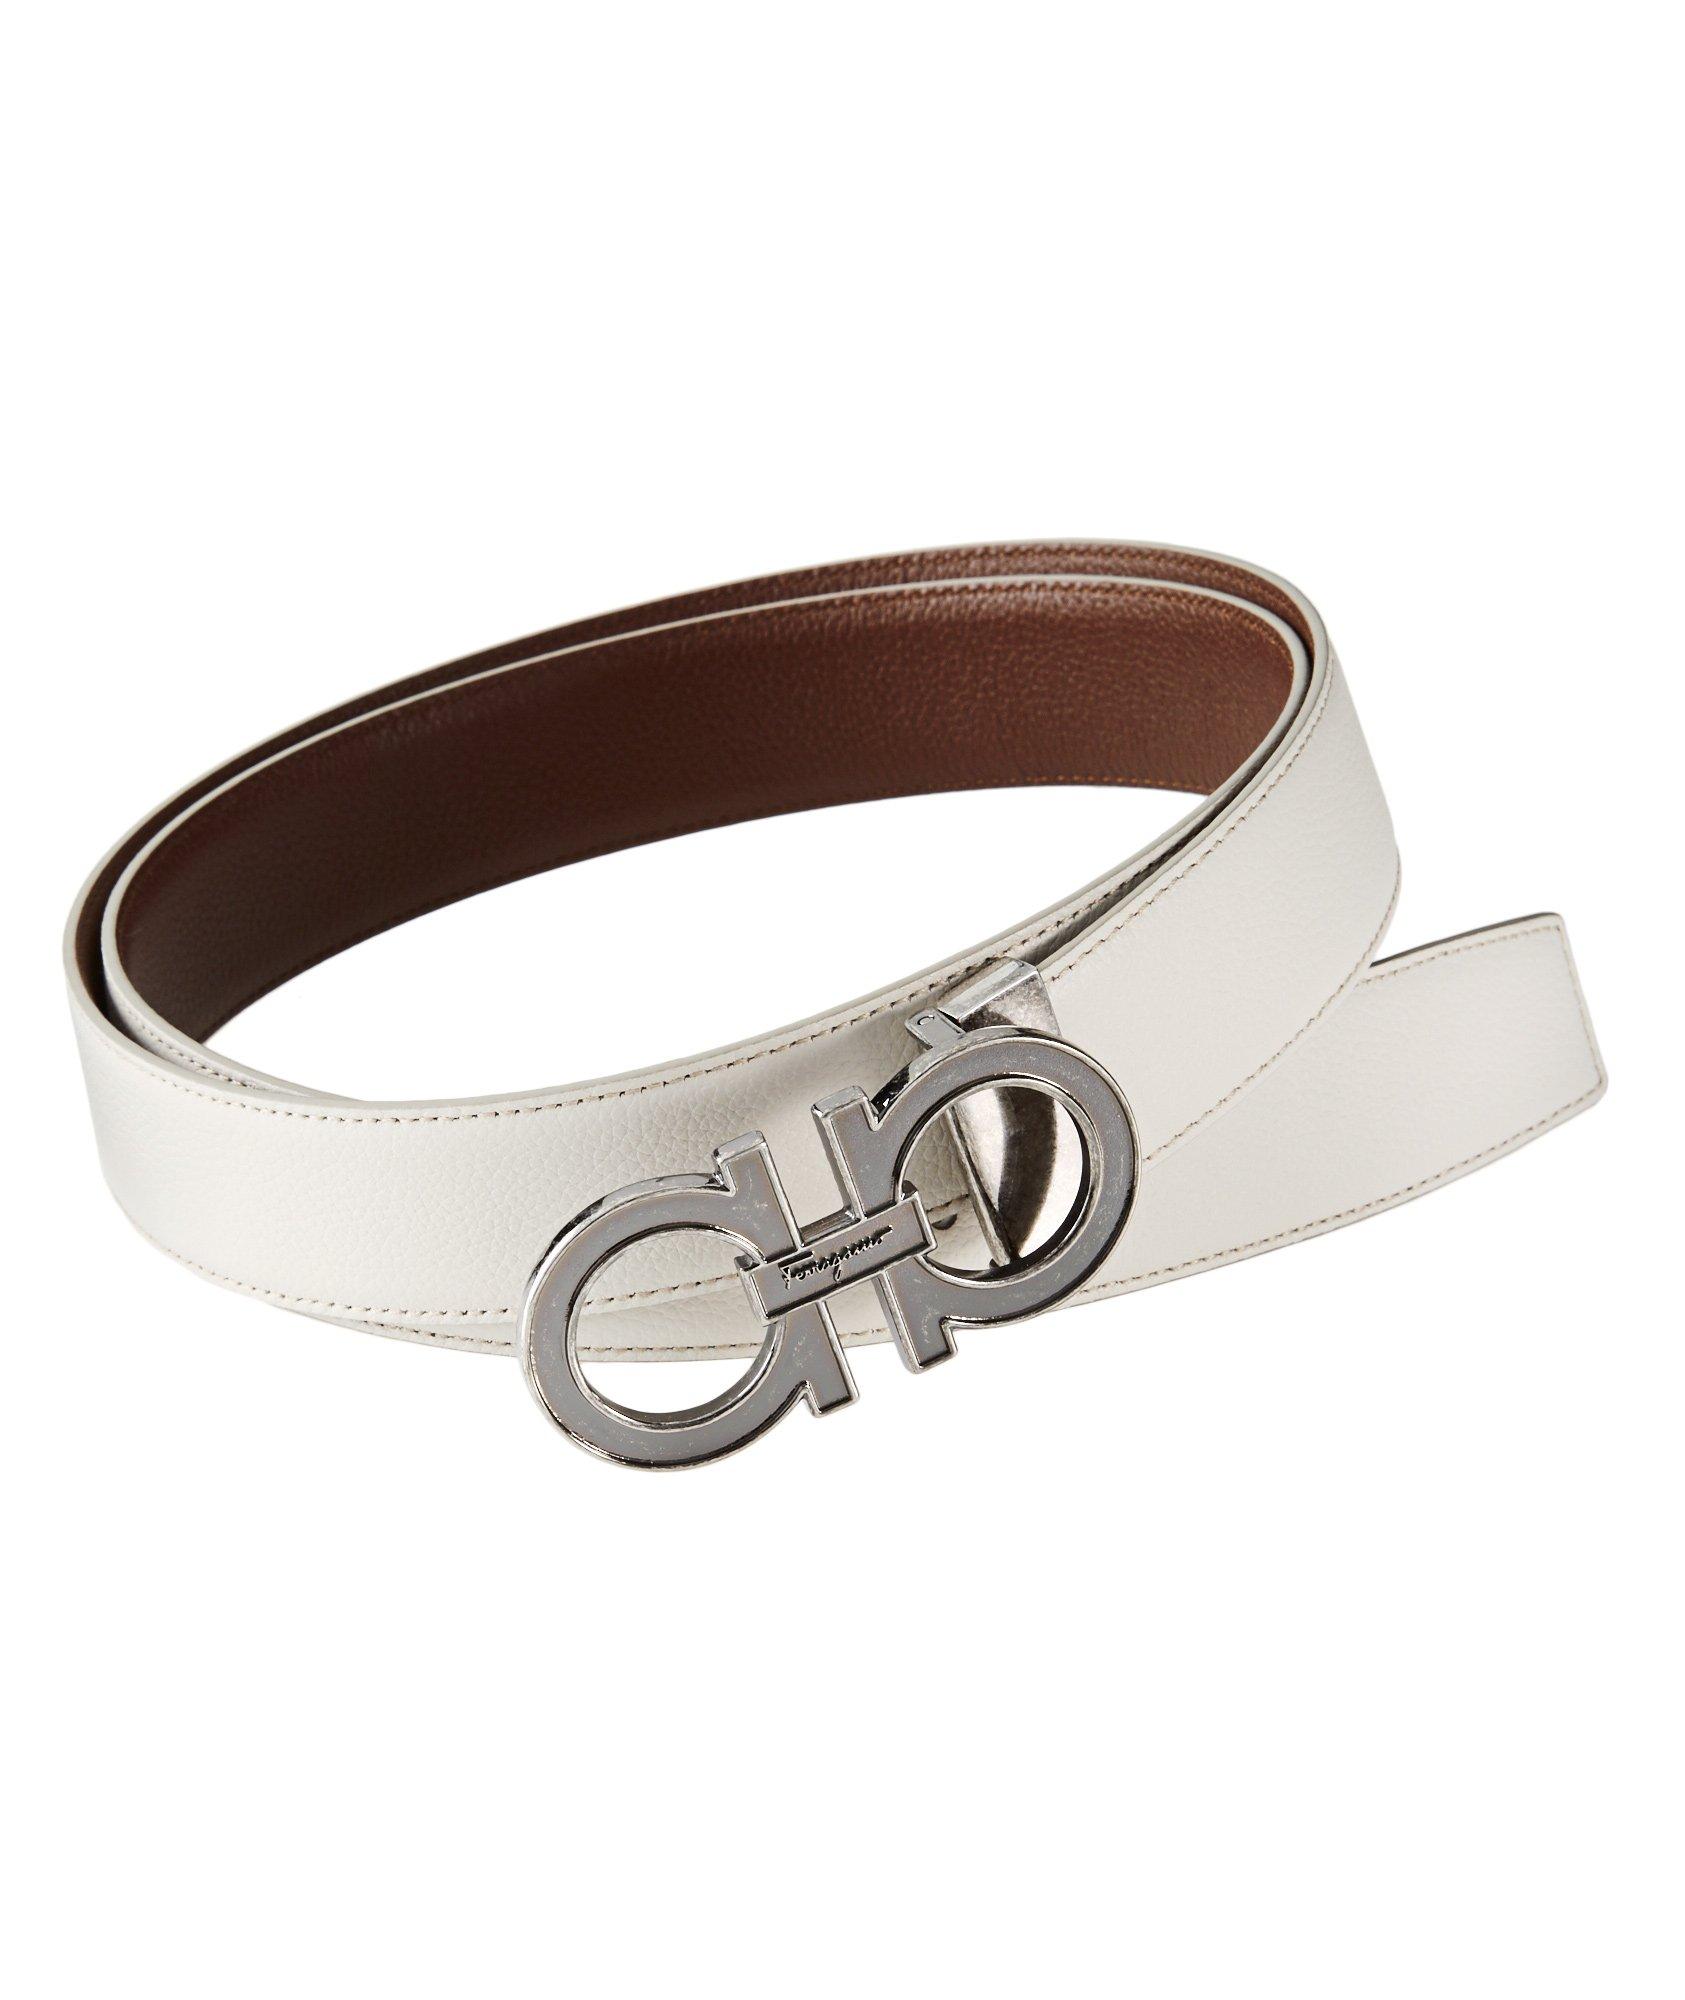 Gancini Leather Belt image 0